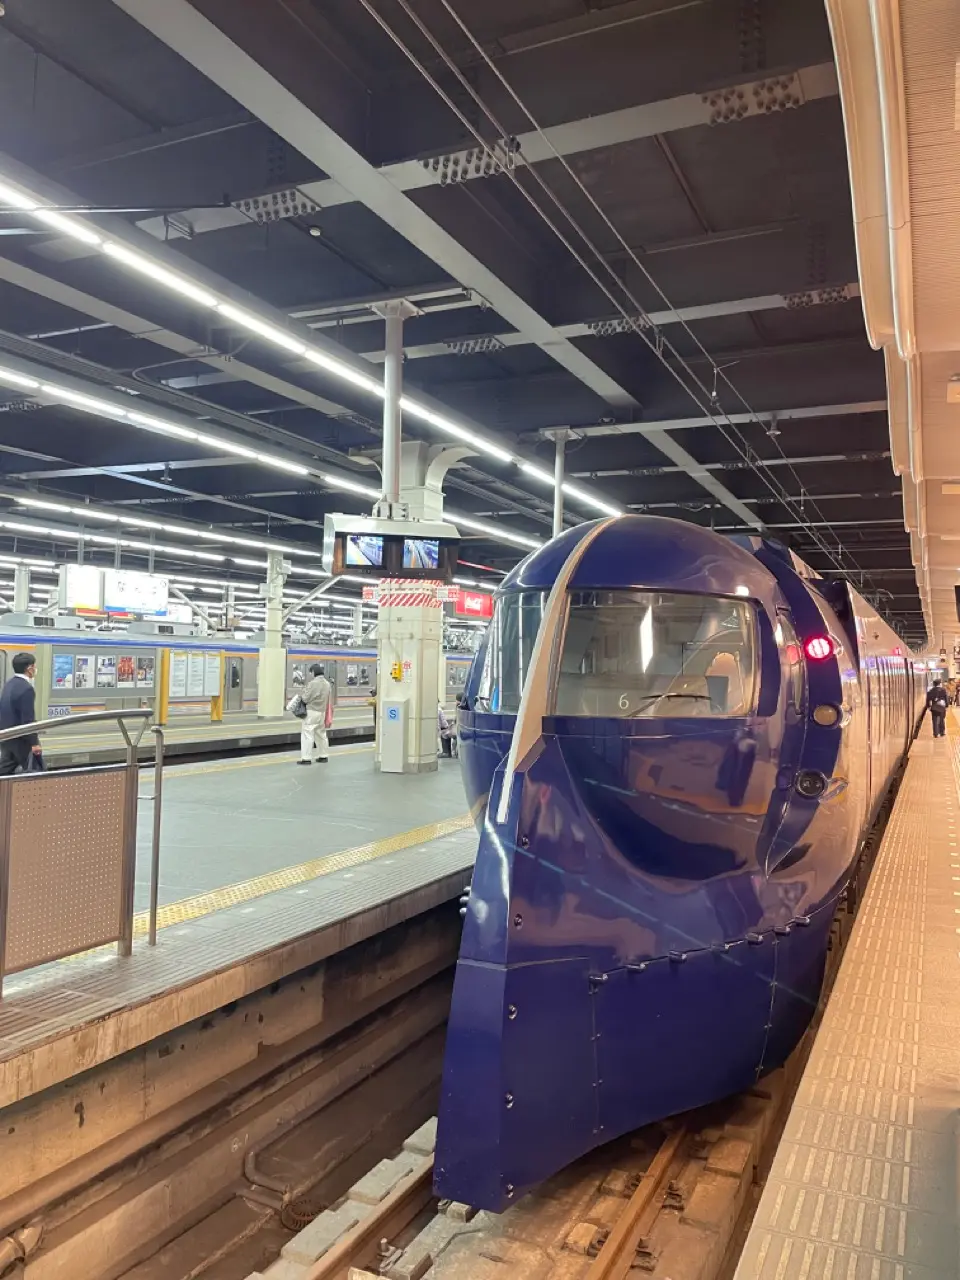 Strange train in Japan train station